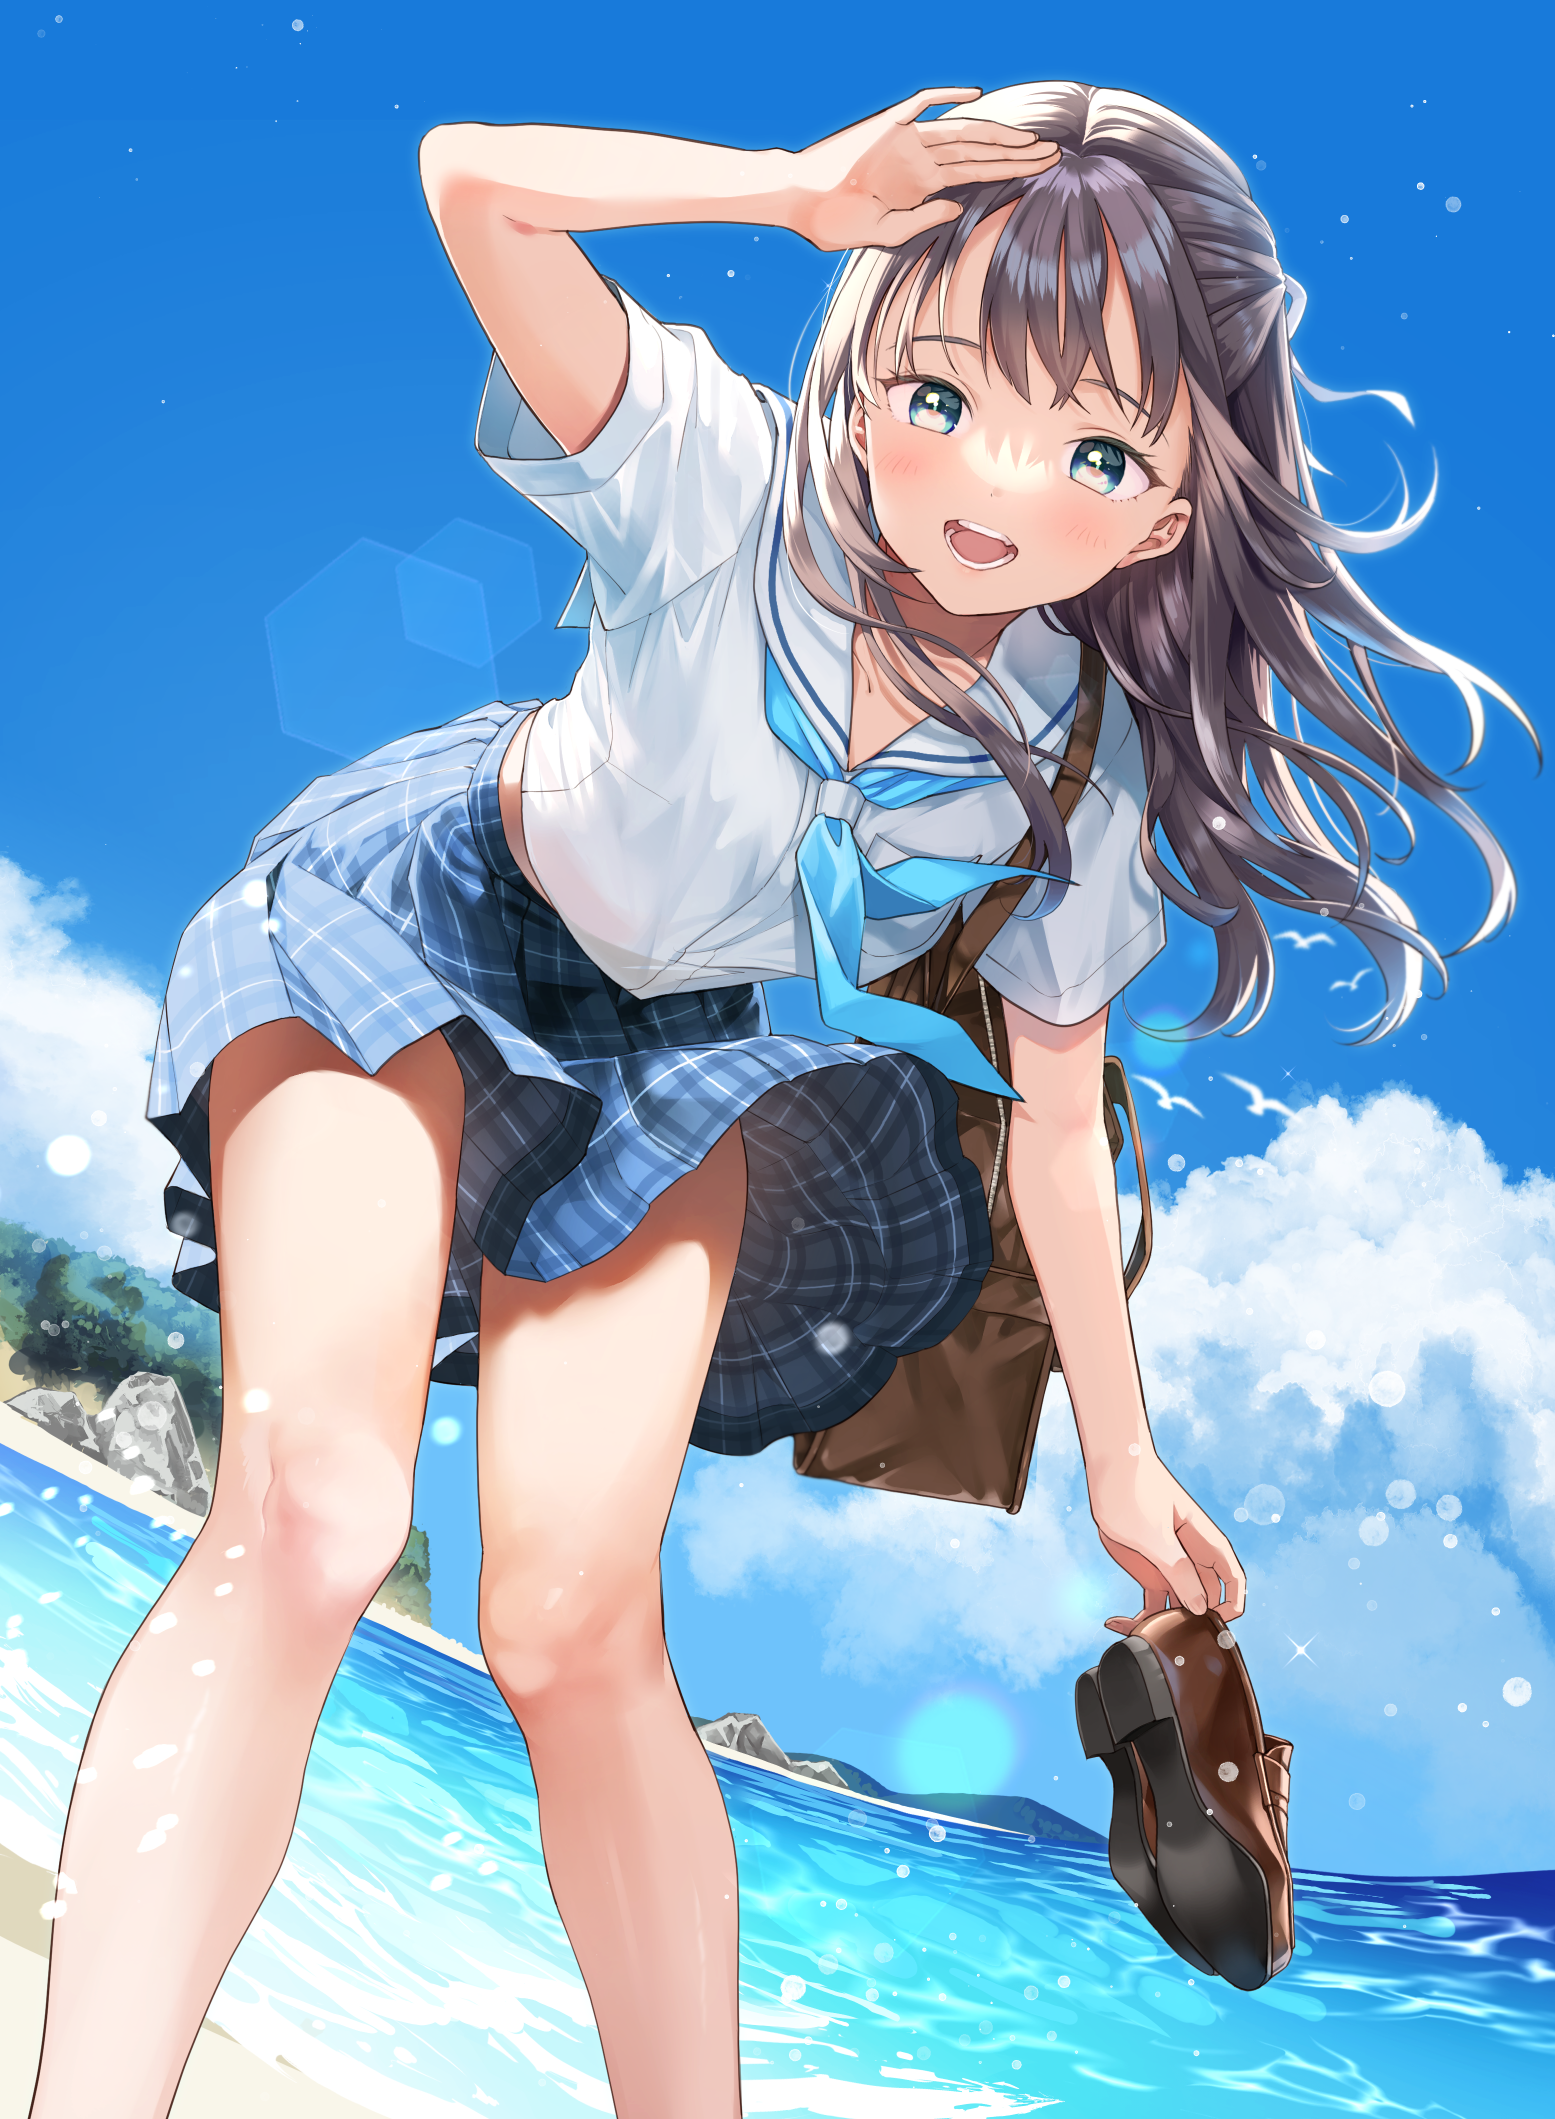 Anime Girls Portrait Display Schoolgirl School Uniform Looking At Viewer Beach Standing In Water Wat 1555x2119